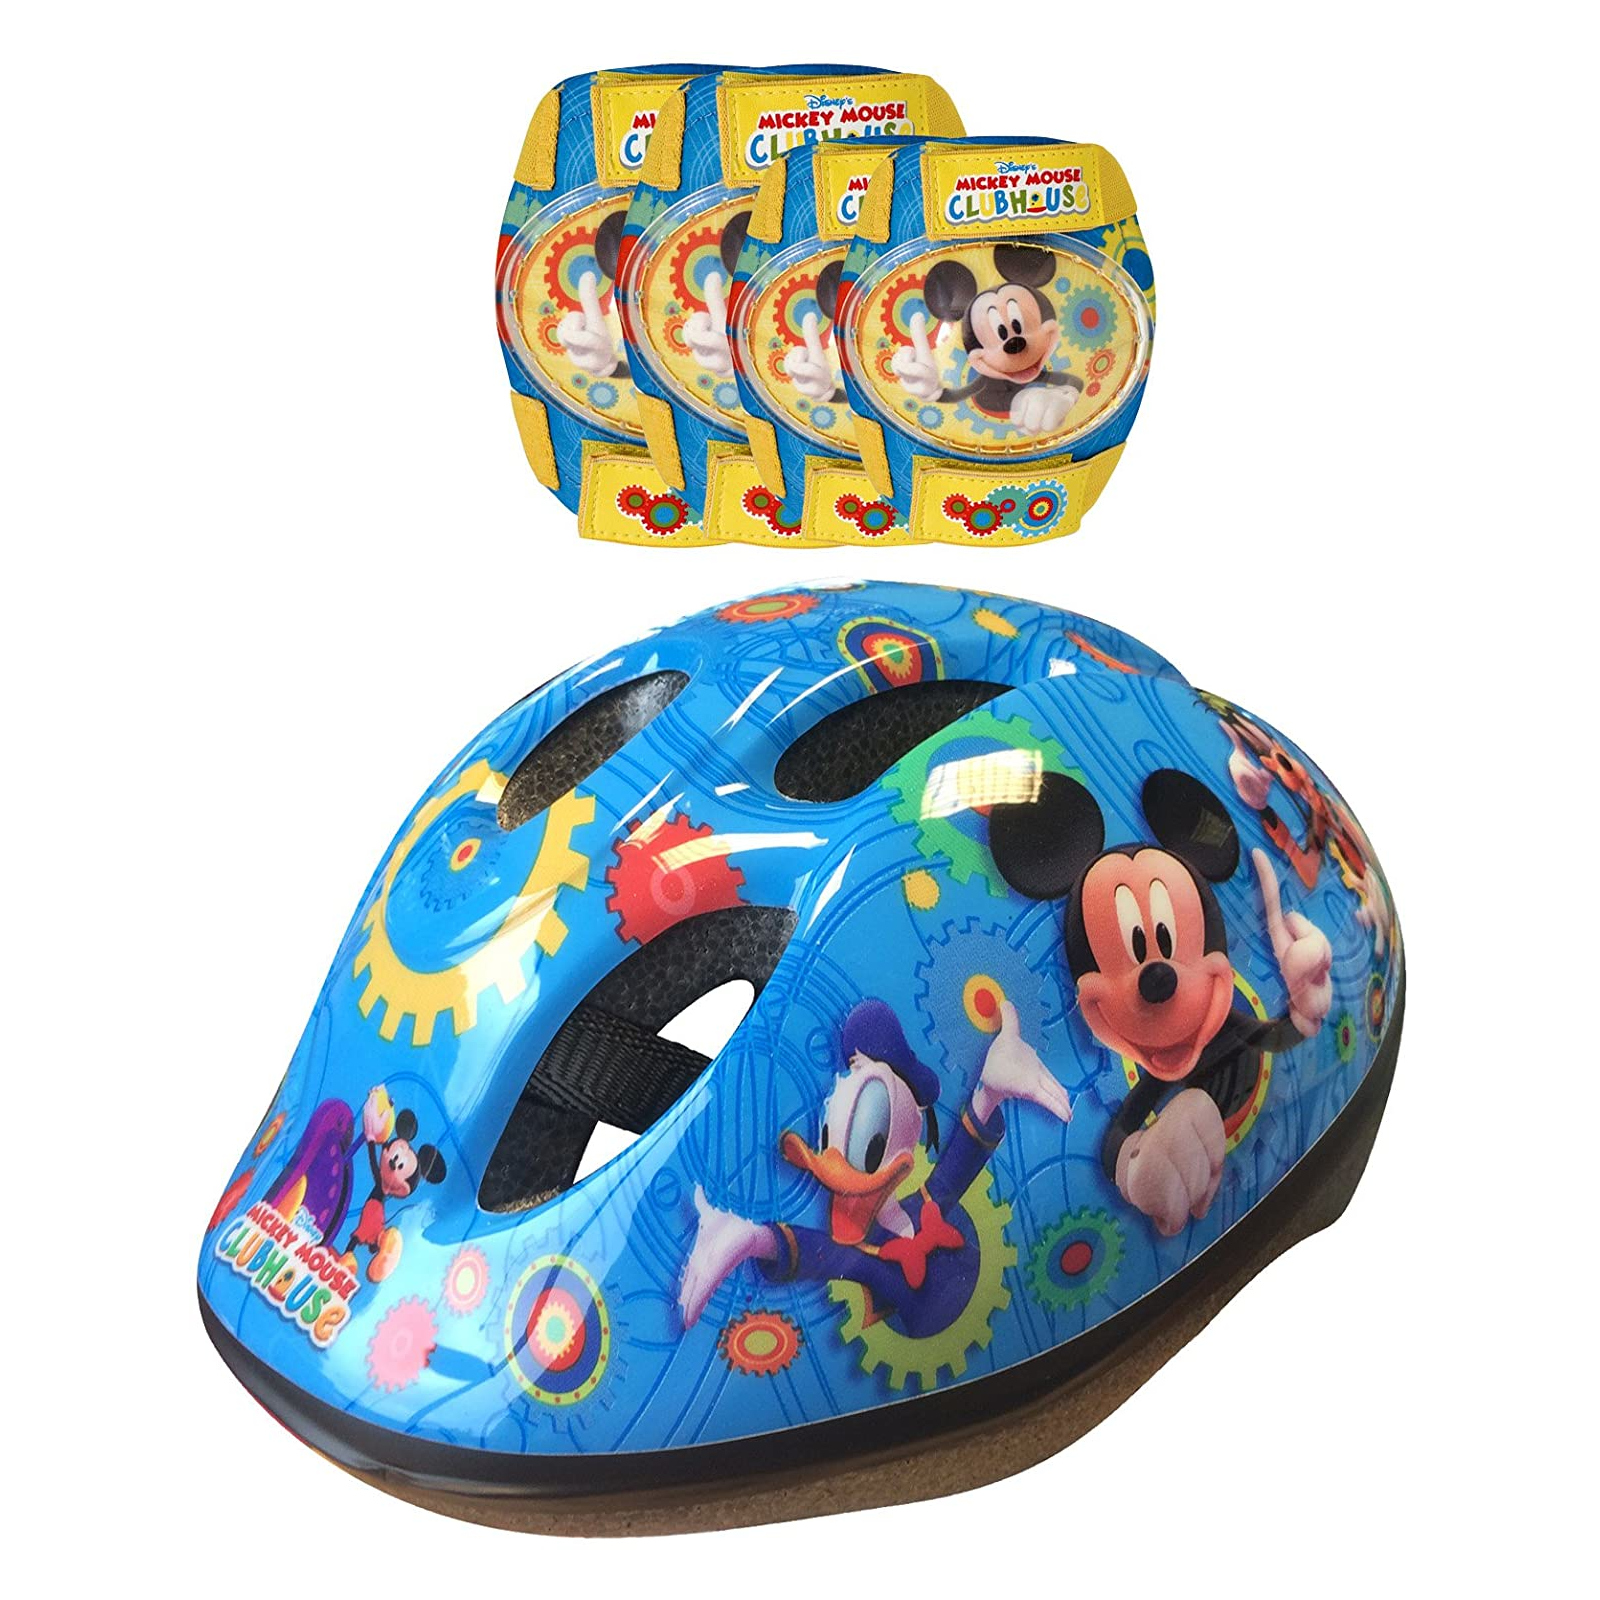 Capacete E Proteções Criança Mickey Mouse Tam. 53-56 Cm | Sport Zone MKP